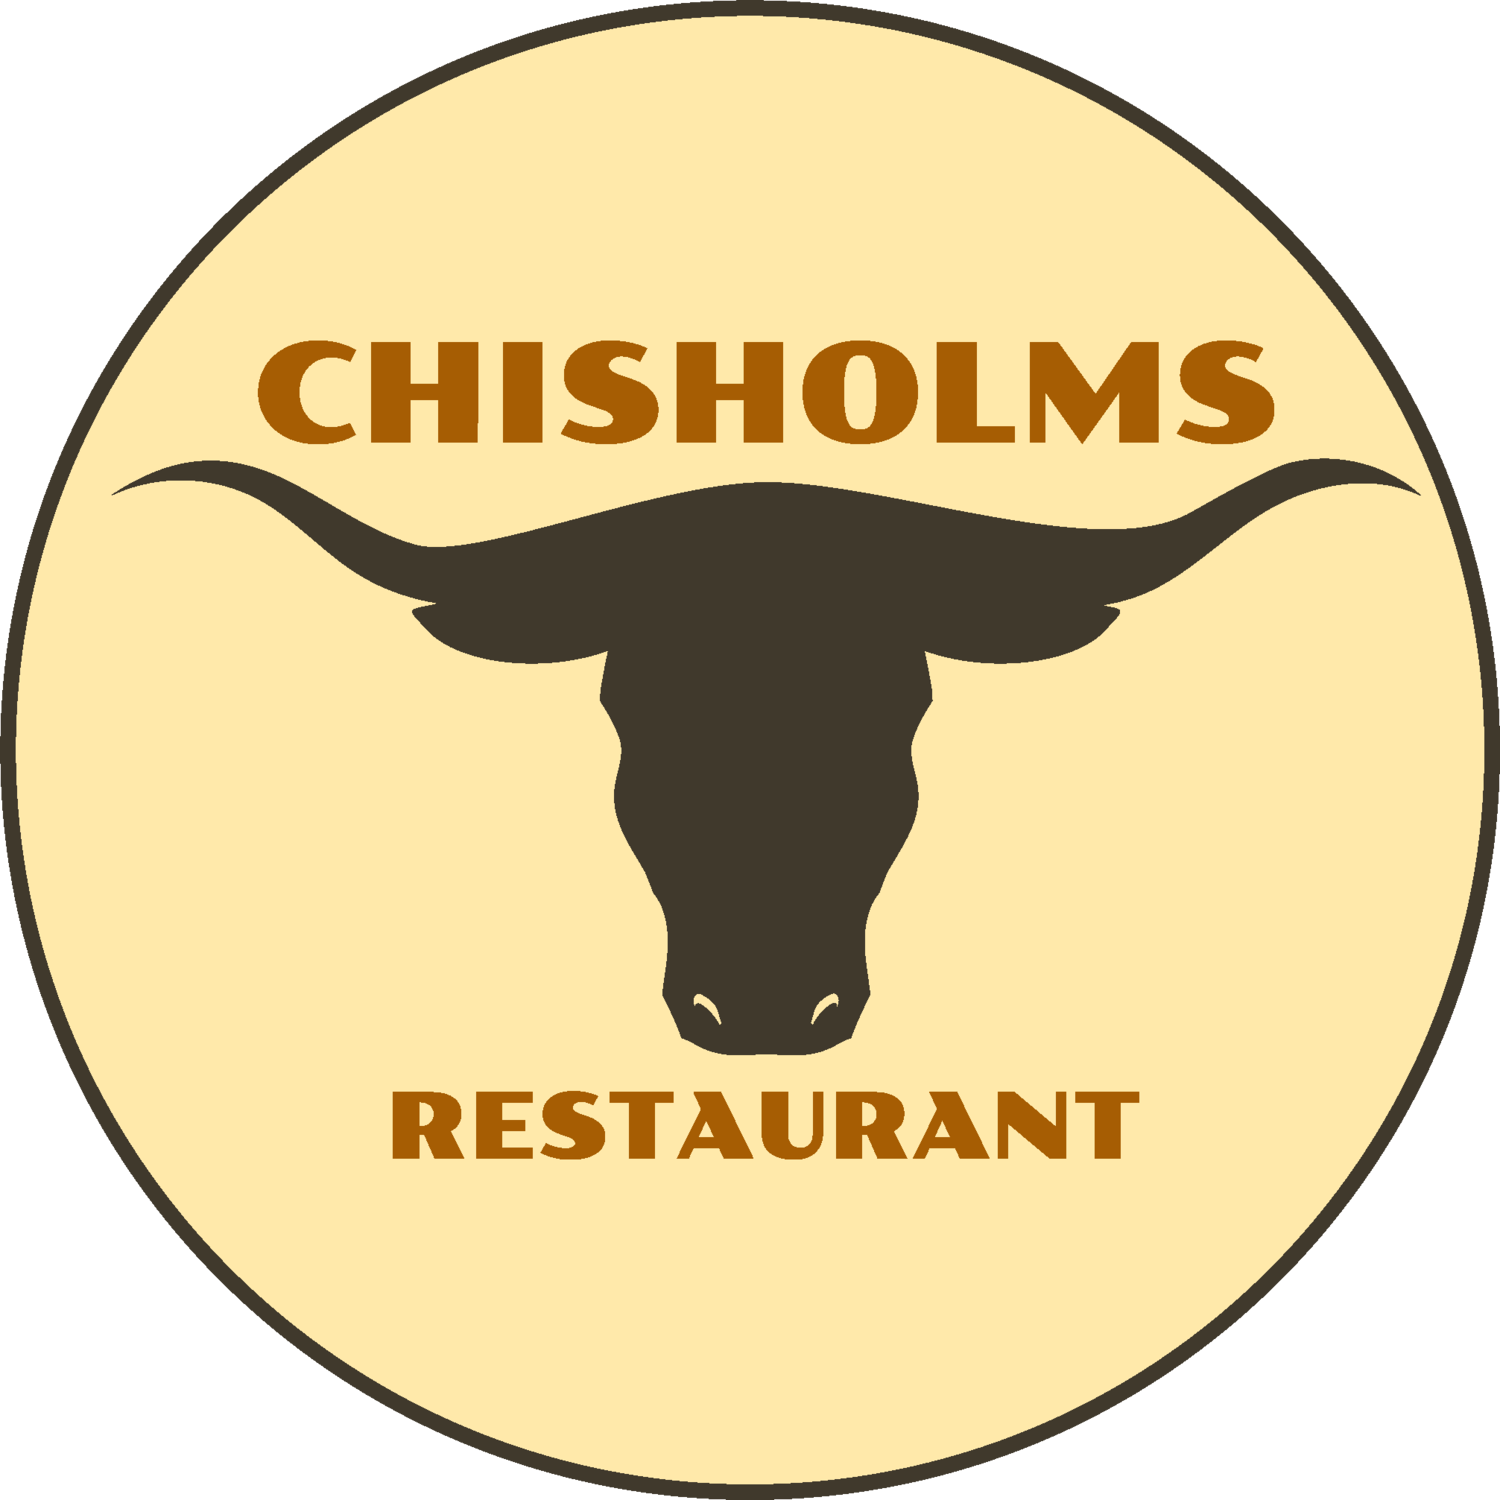 Chisholms Restaurant